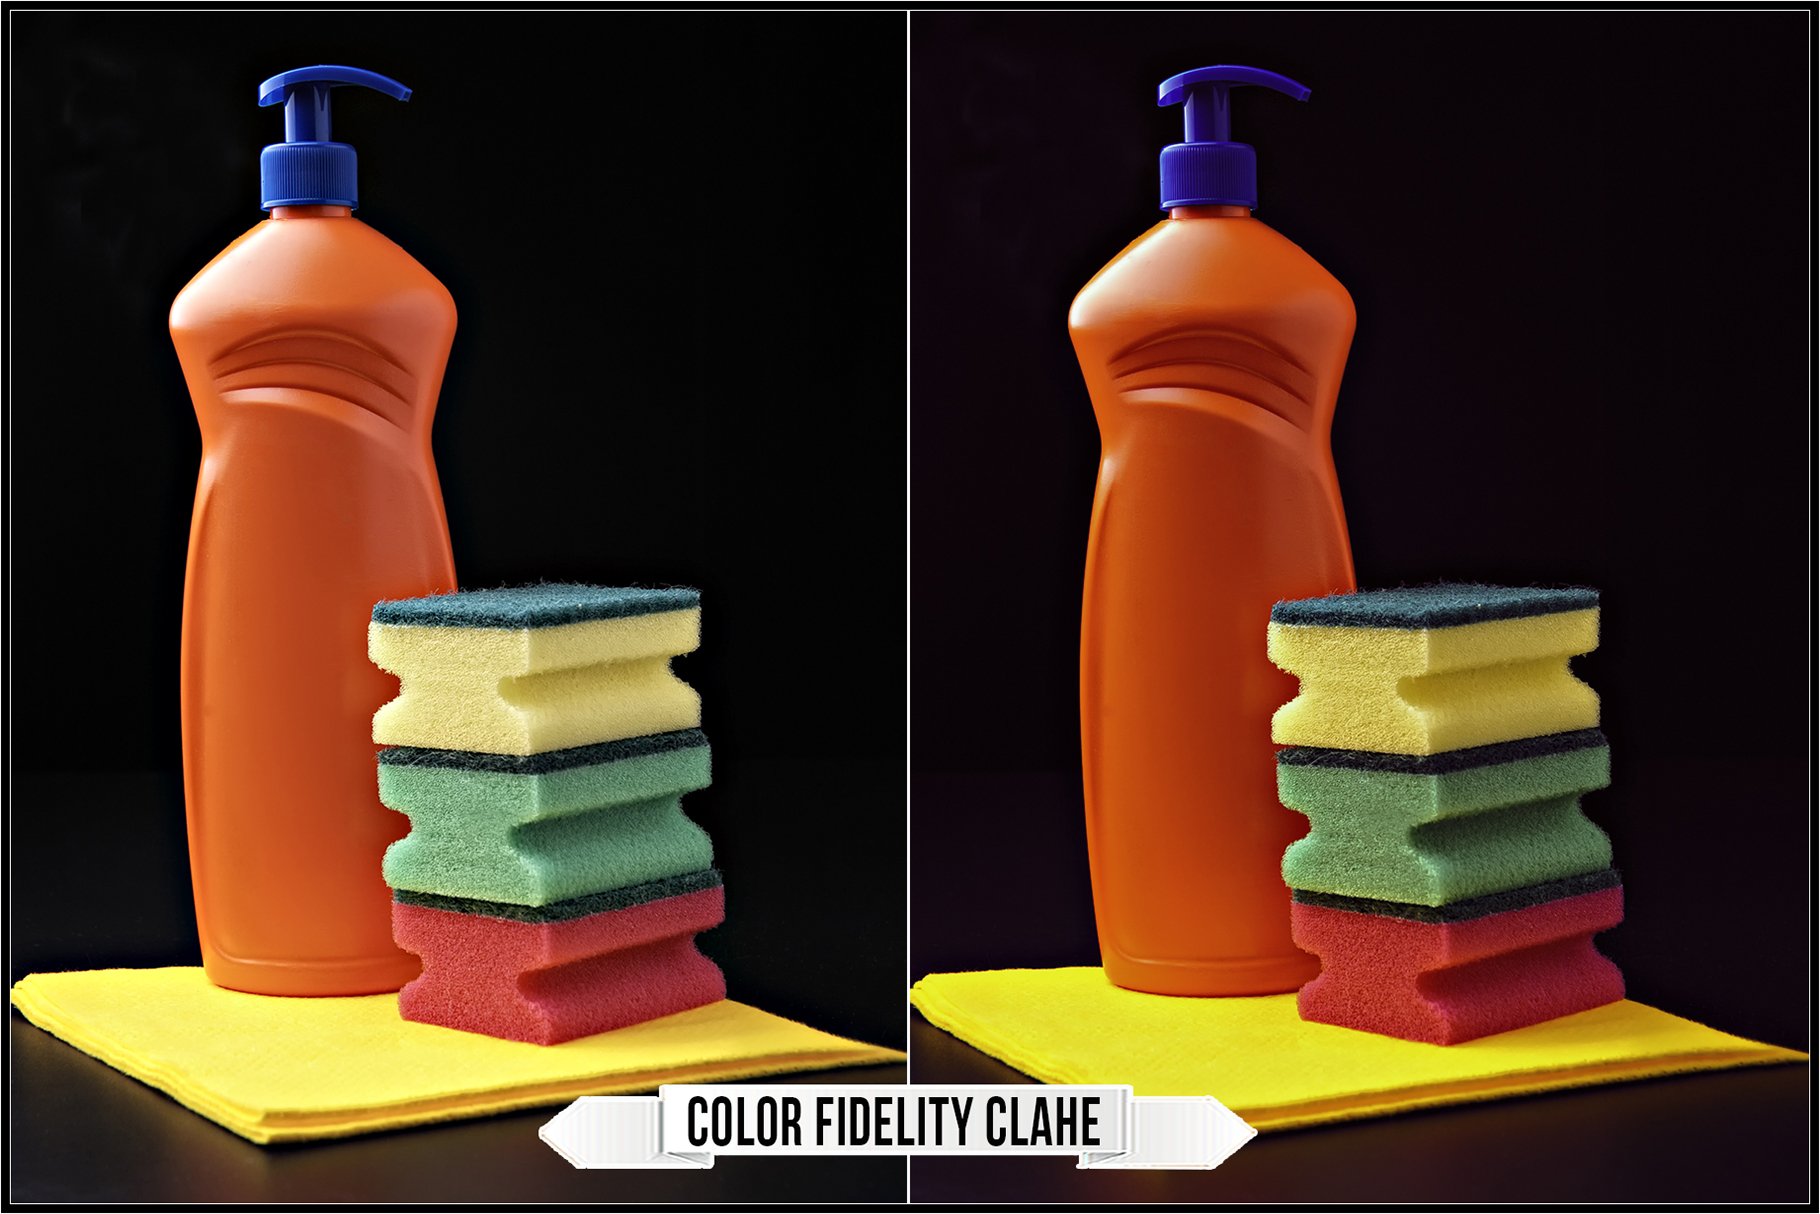 color fidelity clahe 462